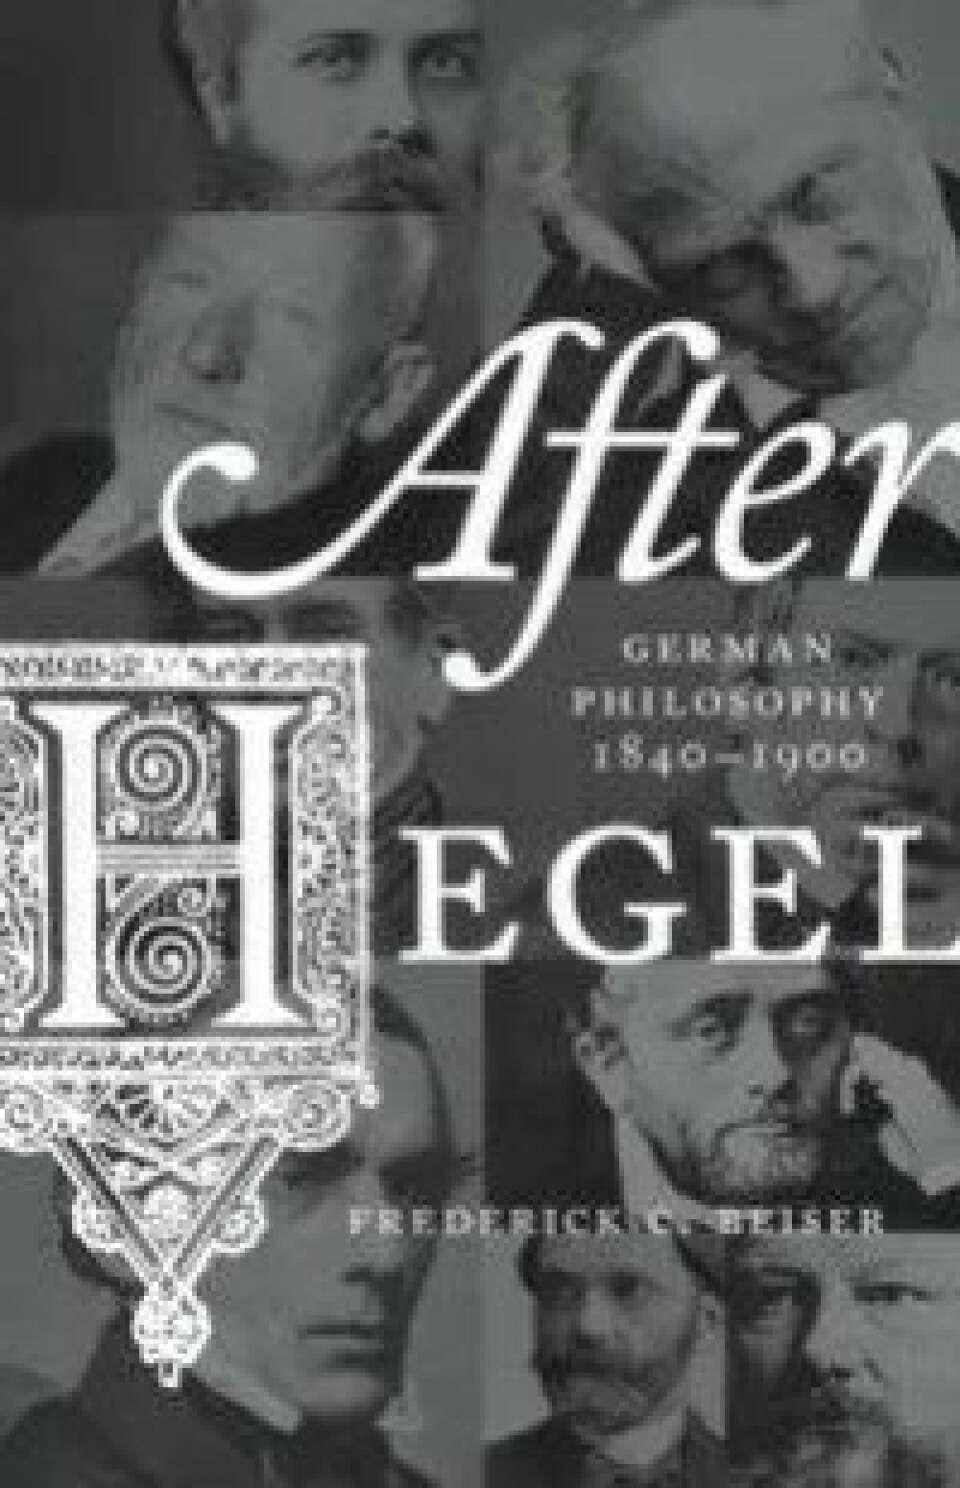 After Hegel. German Philosophy 1840–1900, Frederick C. Beiser, Princeton University Press, 2014.